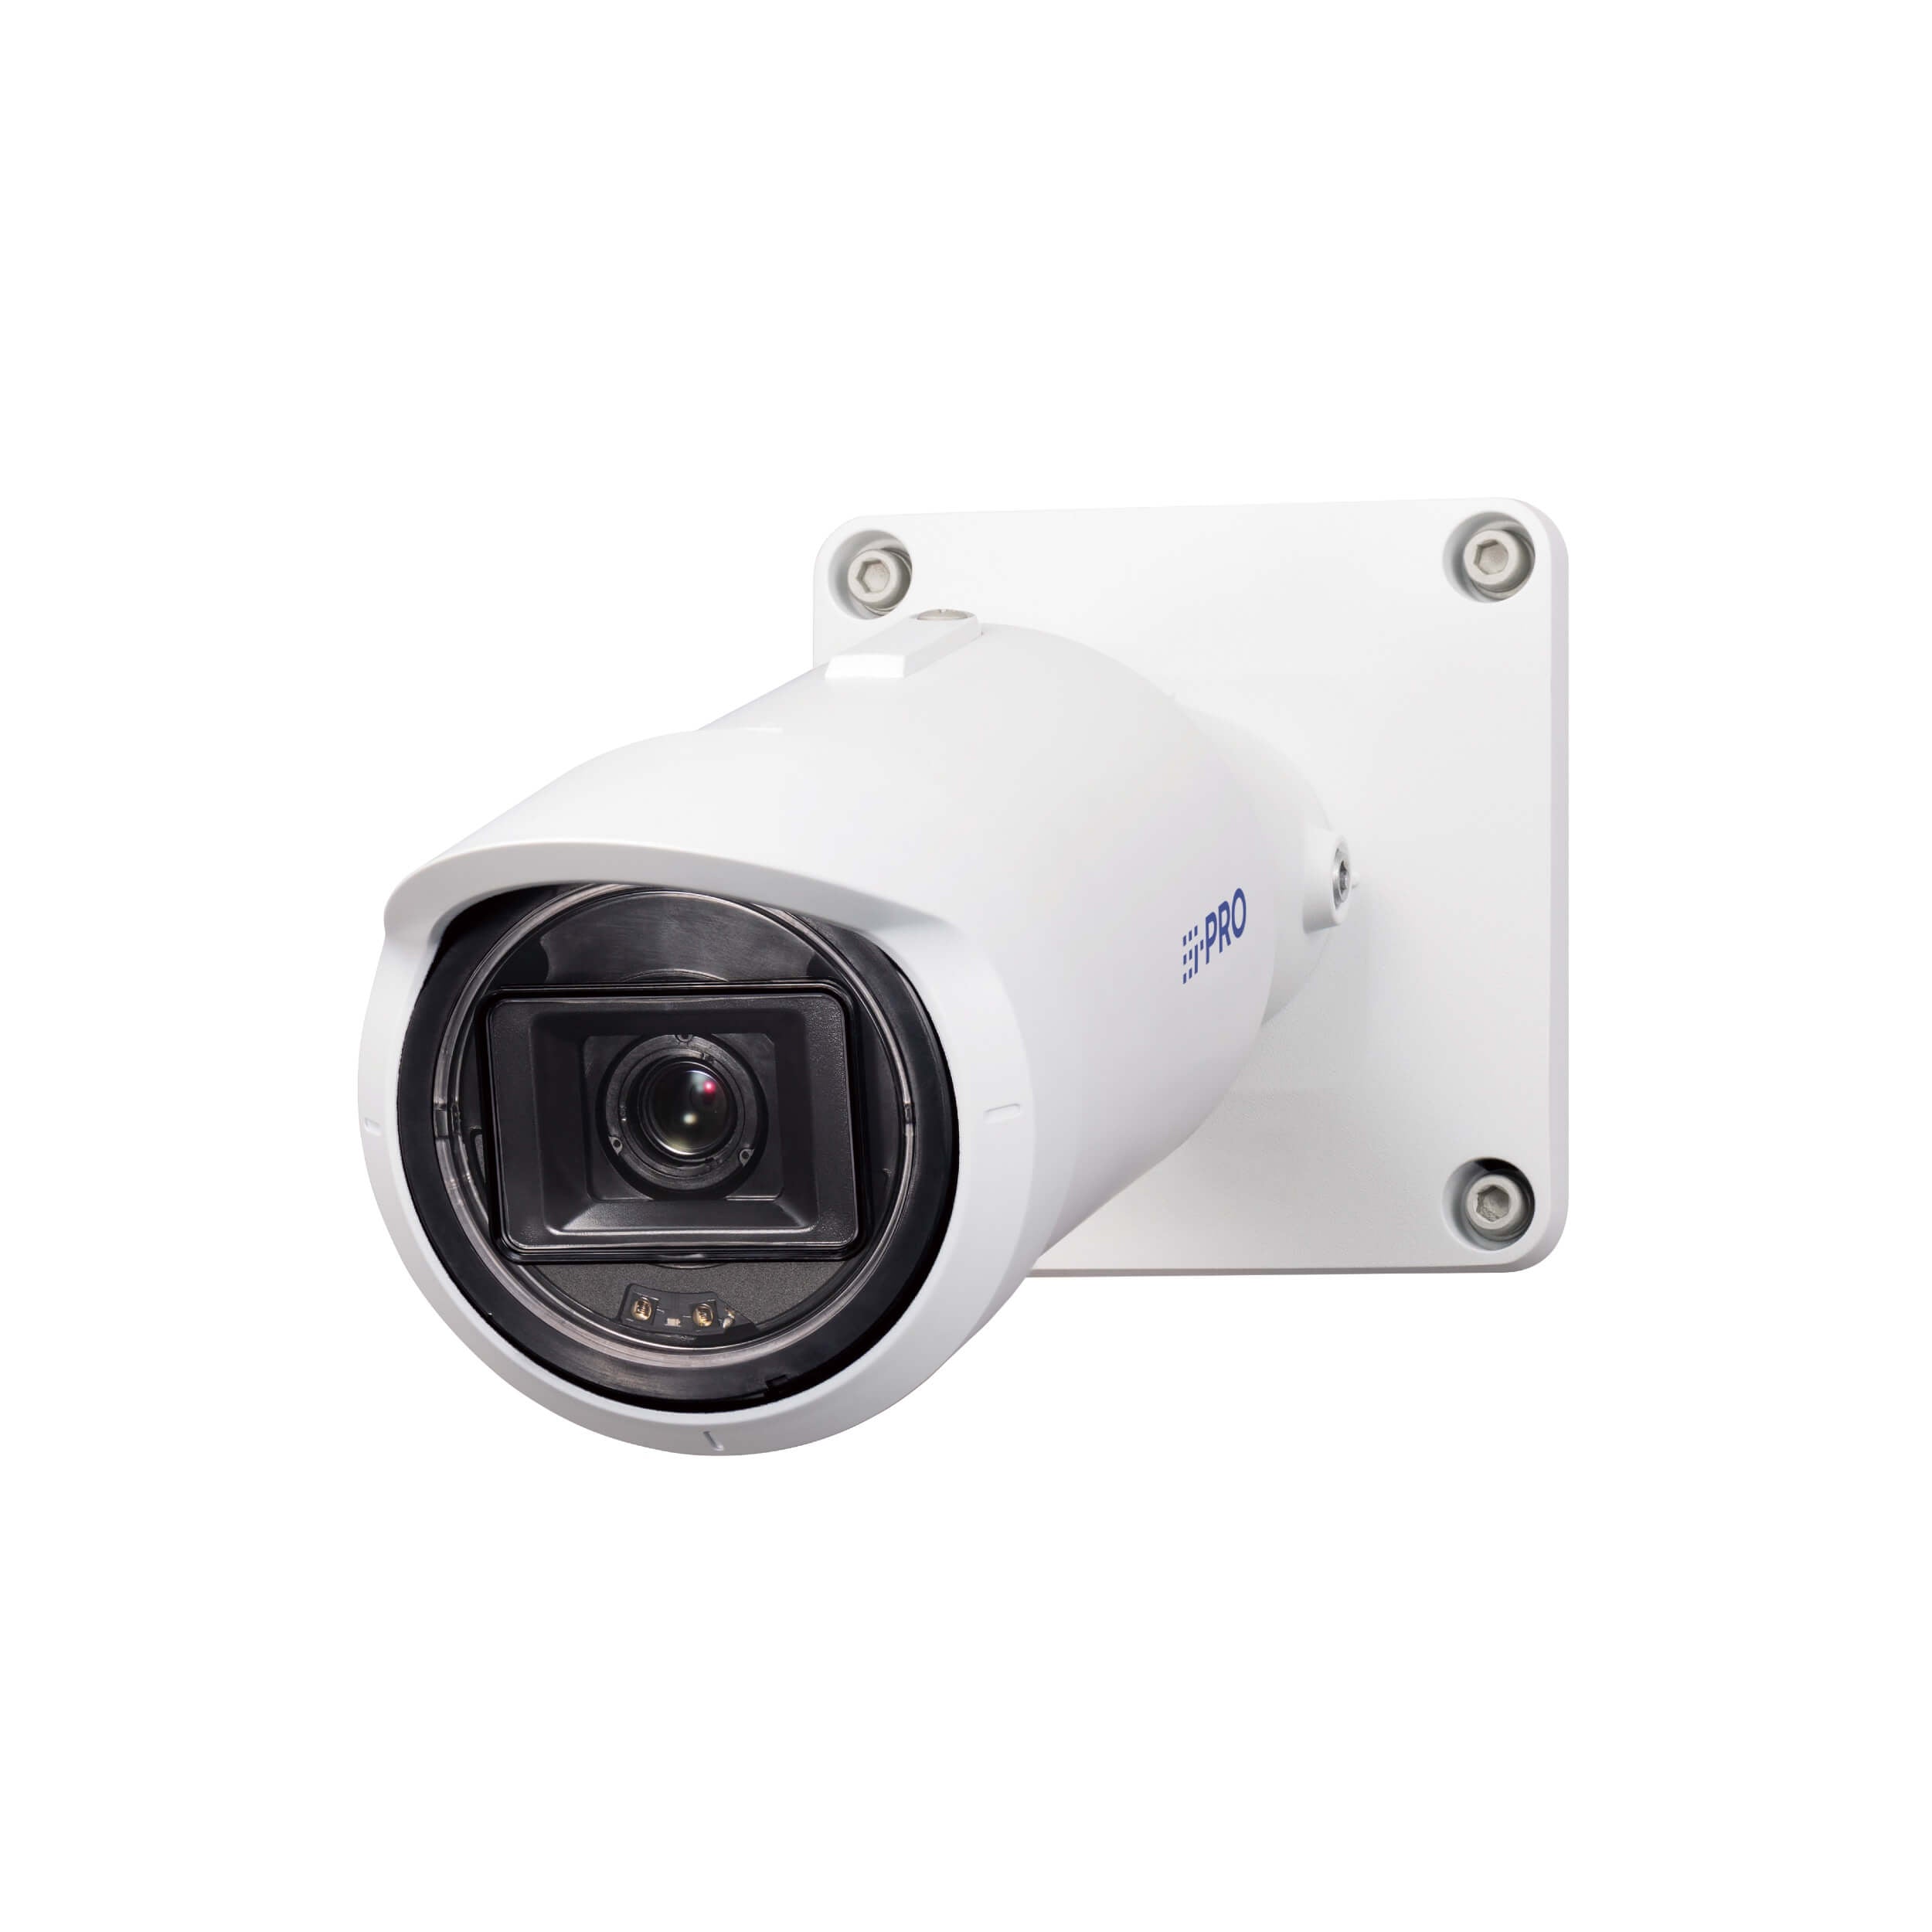 Panasonic WV-S15700-V2LN 8 Megapixel Network IR Outdoor Bullet Camera with 2.9-9 mm Lens